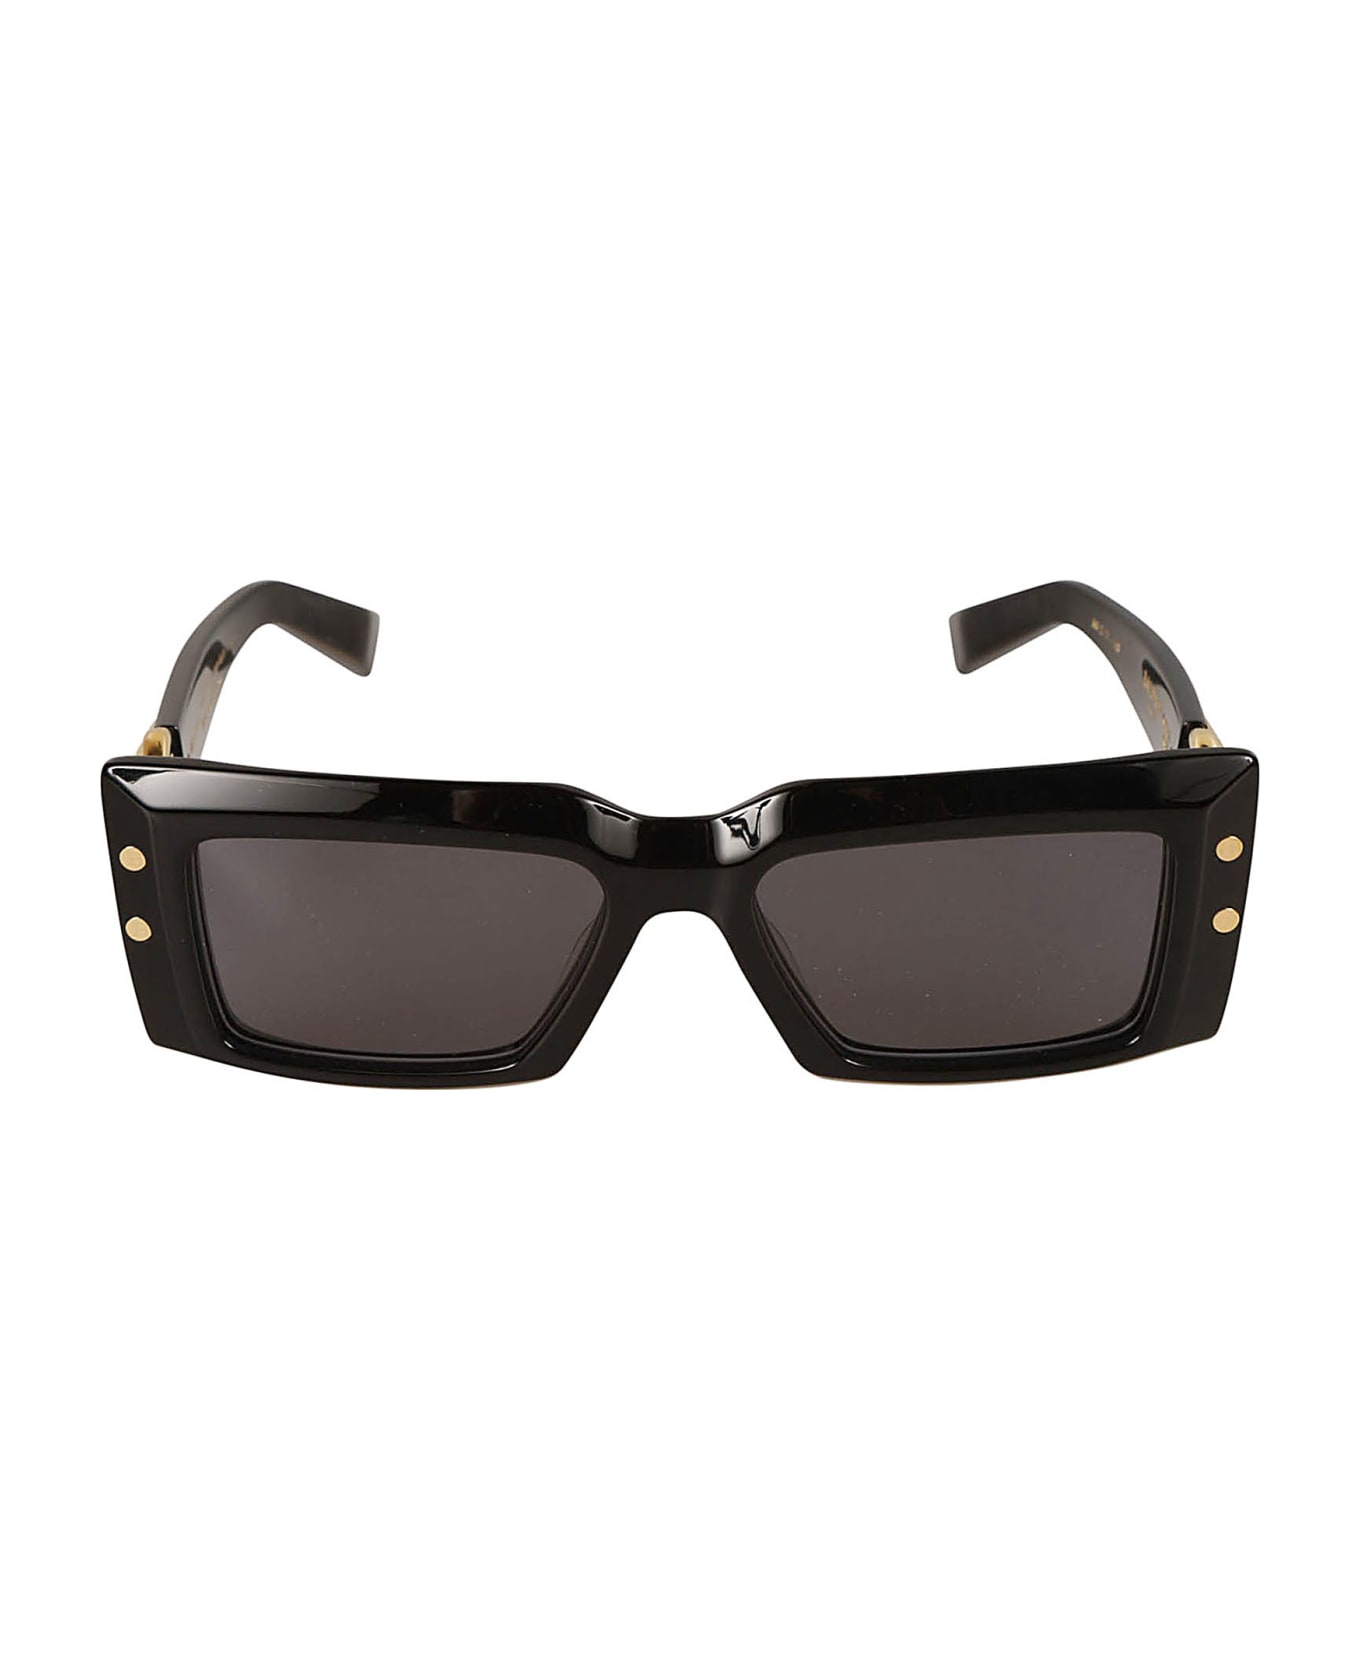 Balmain Imperial Sunglasses Sunglasses - Black/Gold